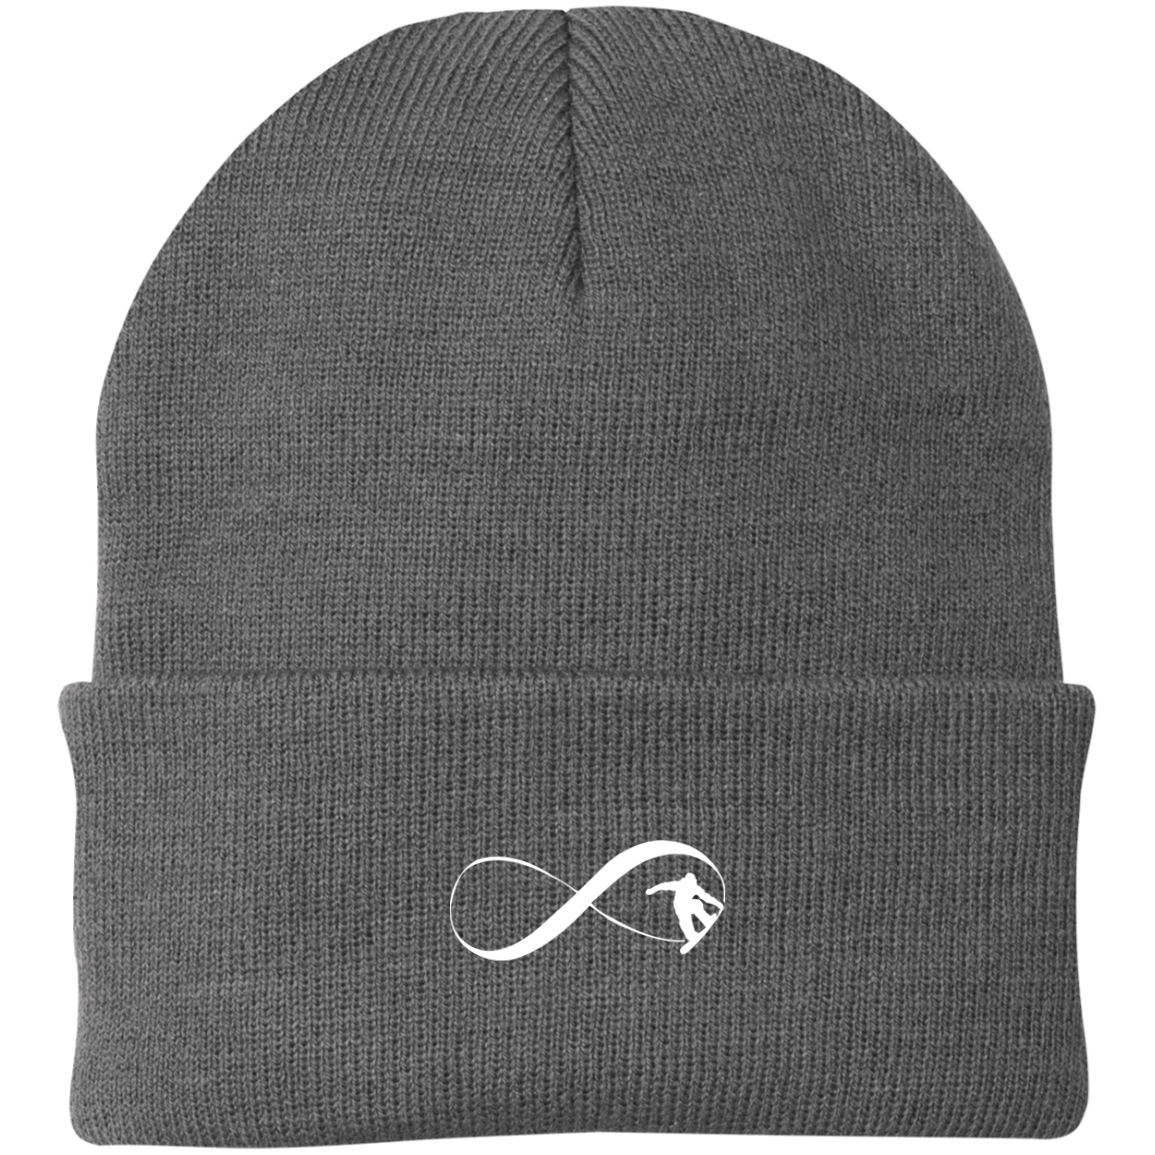 Infinity Snowboard Knit Cap - Powderaddicts